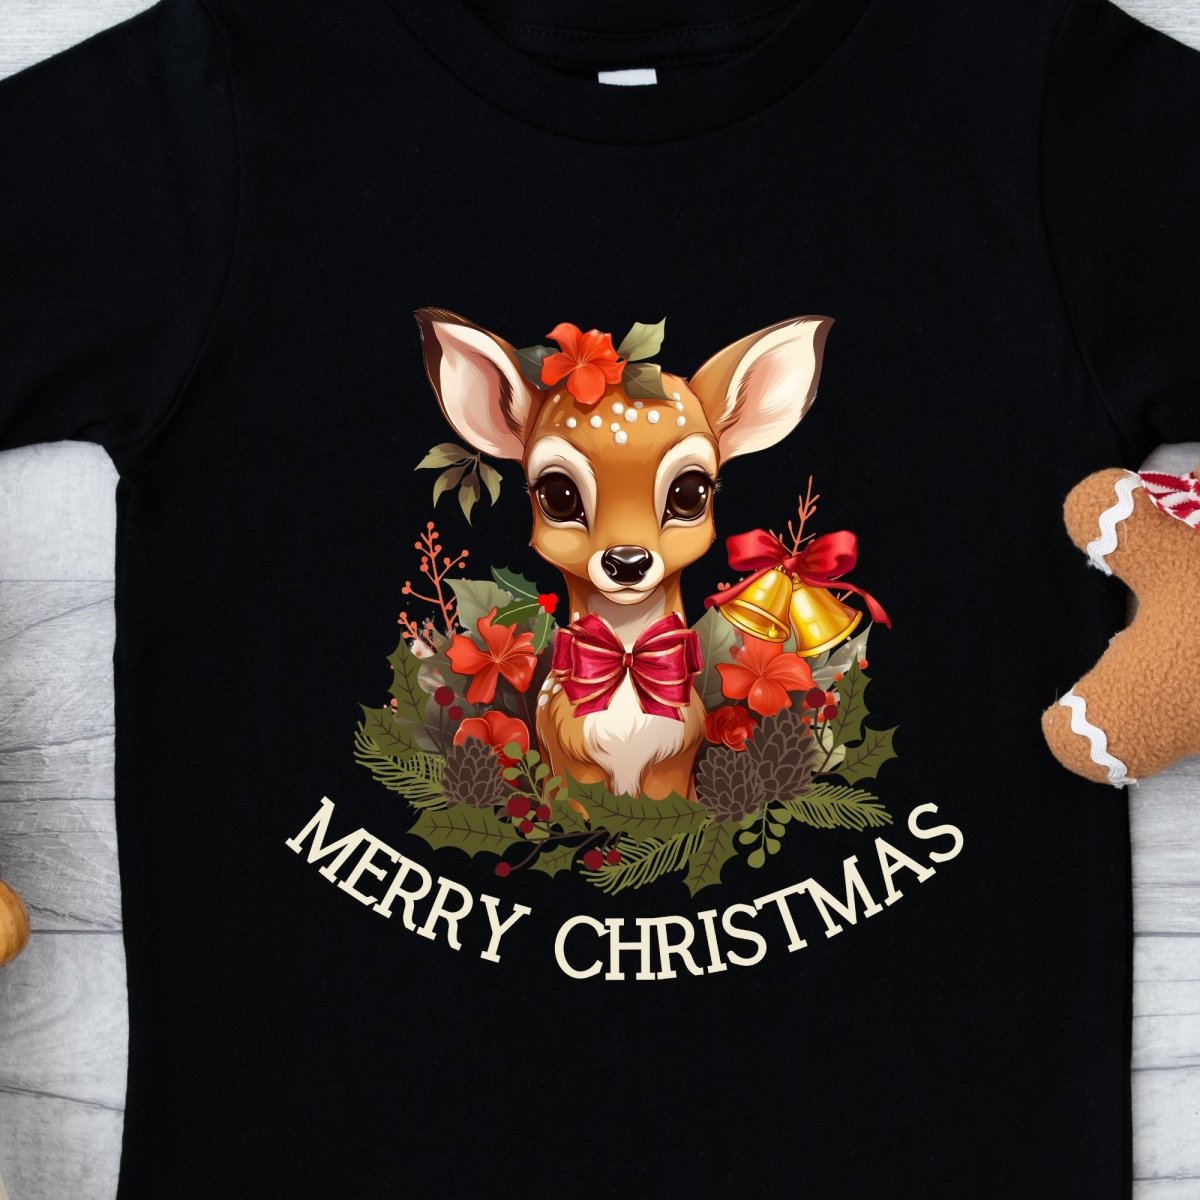 Christmas Deer T-Shirt - High Quality Festive Family Children T-Shirt, Gift for Deer Lovers, Cute Christmas Shirt, Toddler Xmas Tee - Everything Pixel